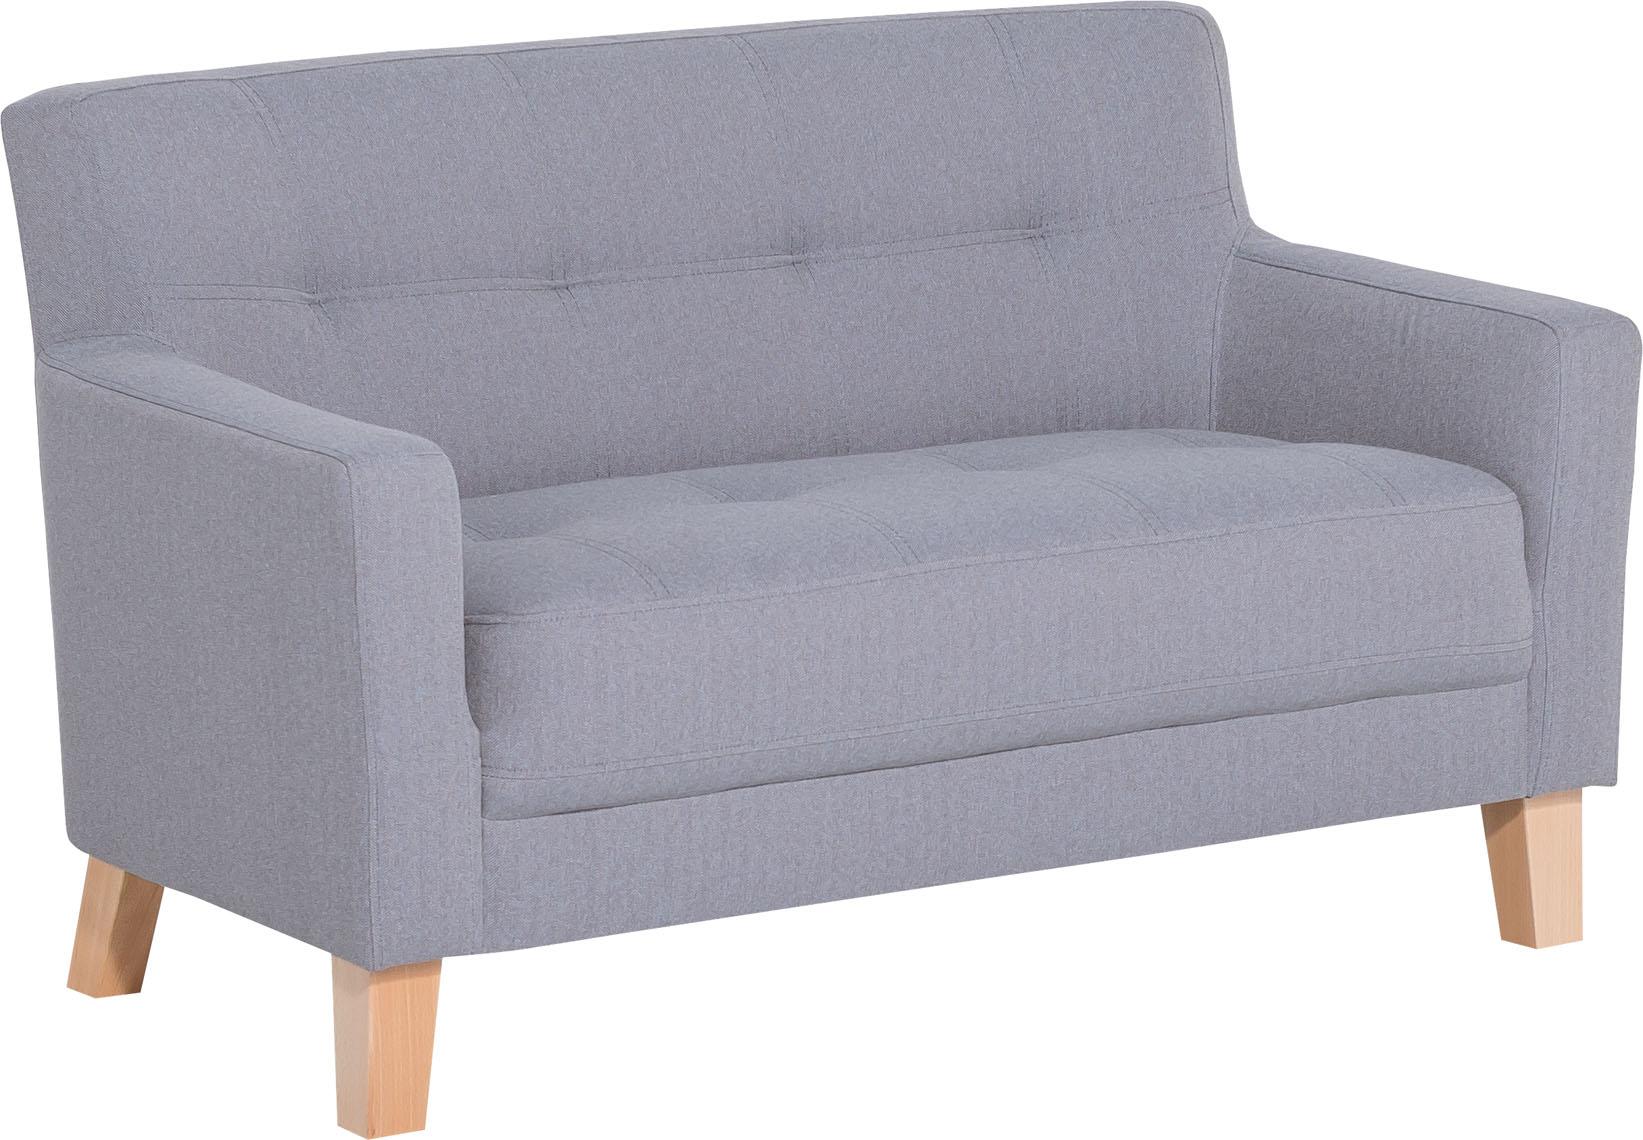 2-seat sofa Roce